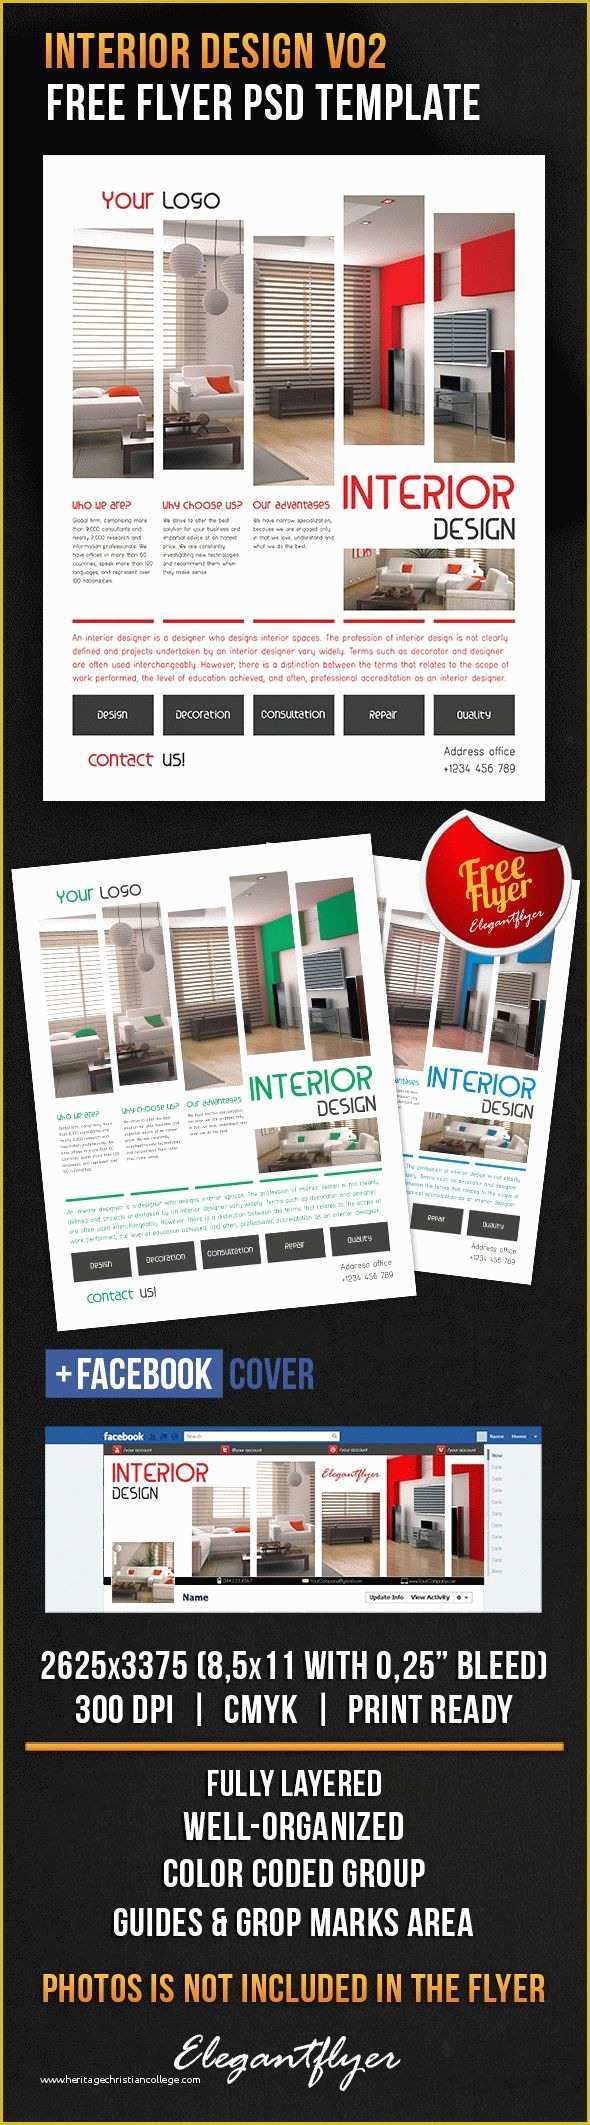 Interior Design Layout Templates Free Of Interior Design V02 – Free Flyer Psd Template – by